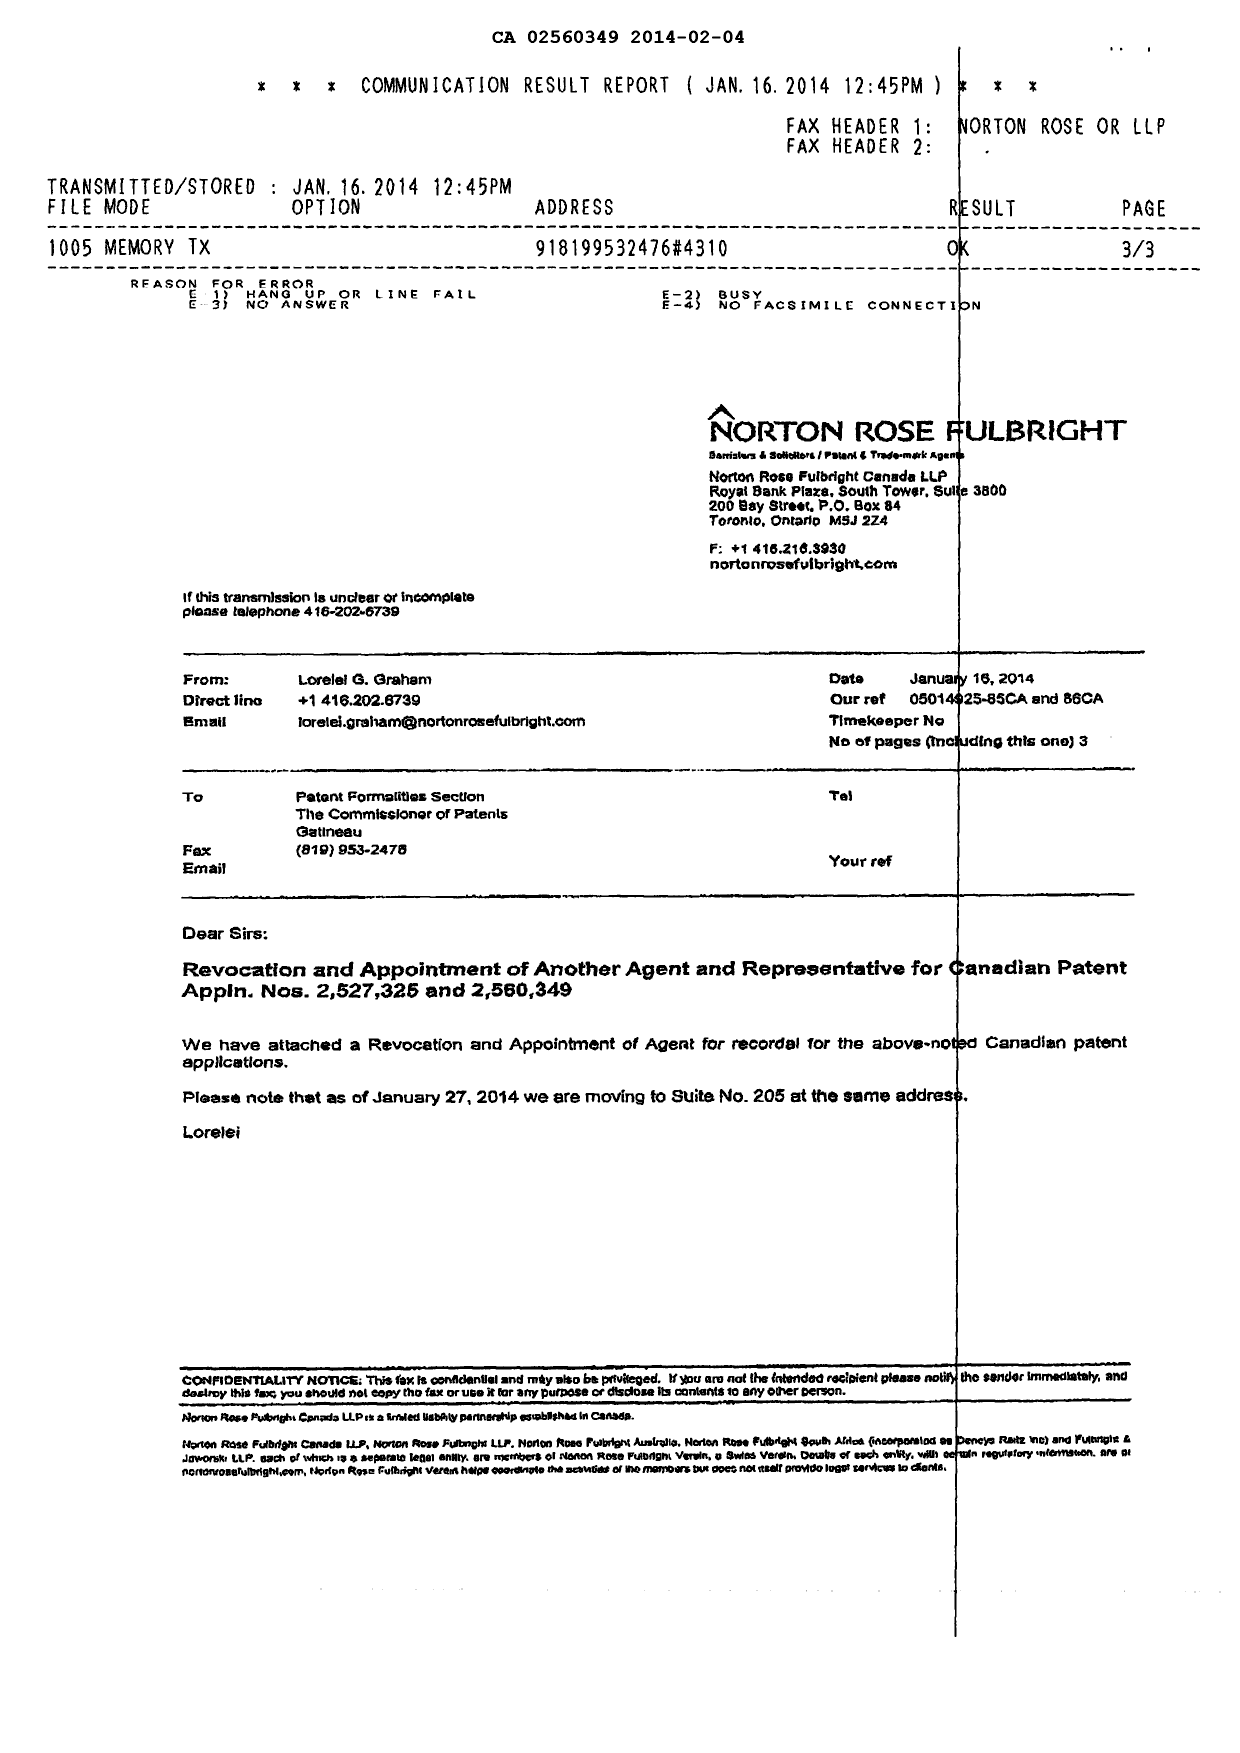 Canadian Patent Document 2560349. Correspondence 20131204. Image 3 of 6